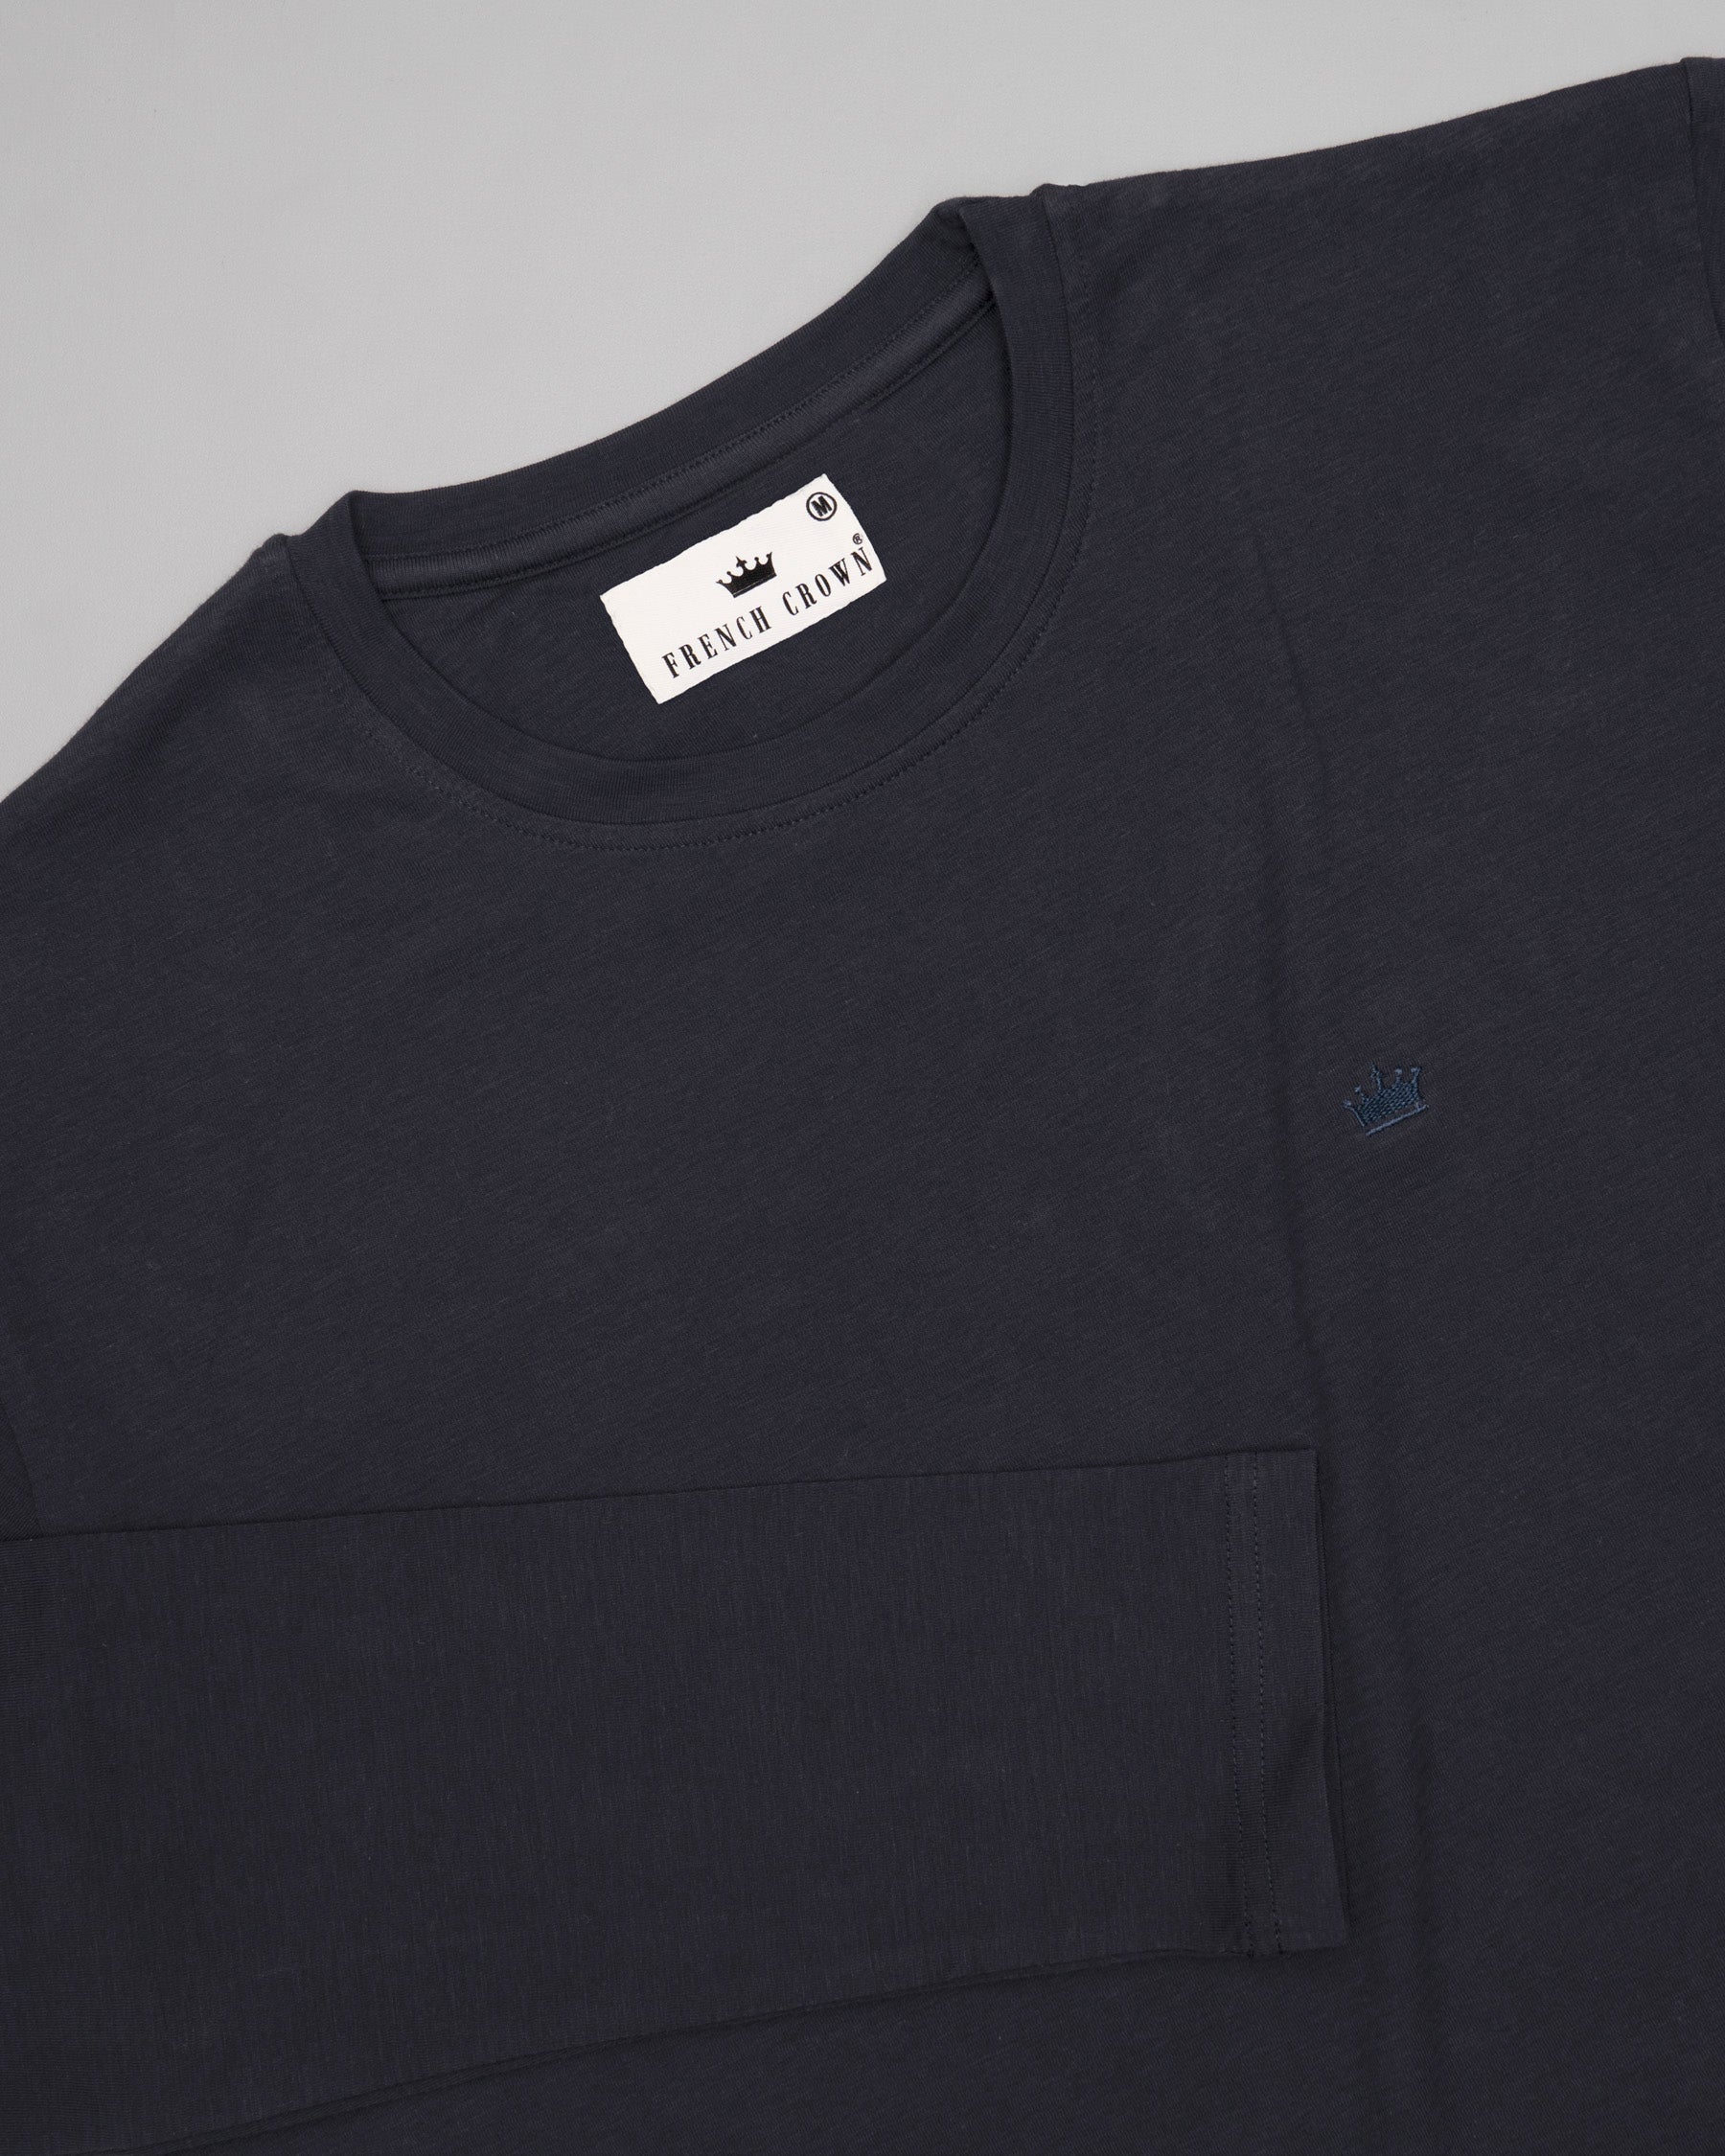 Denim Blue Slubbed Full-Sleeve Super soft Supima Organic Cotton Jersey T-shirt TS149-S, TS149-L, TS149-XL, TS149-XXL, TS149-M